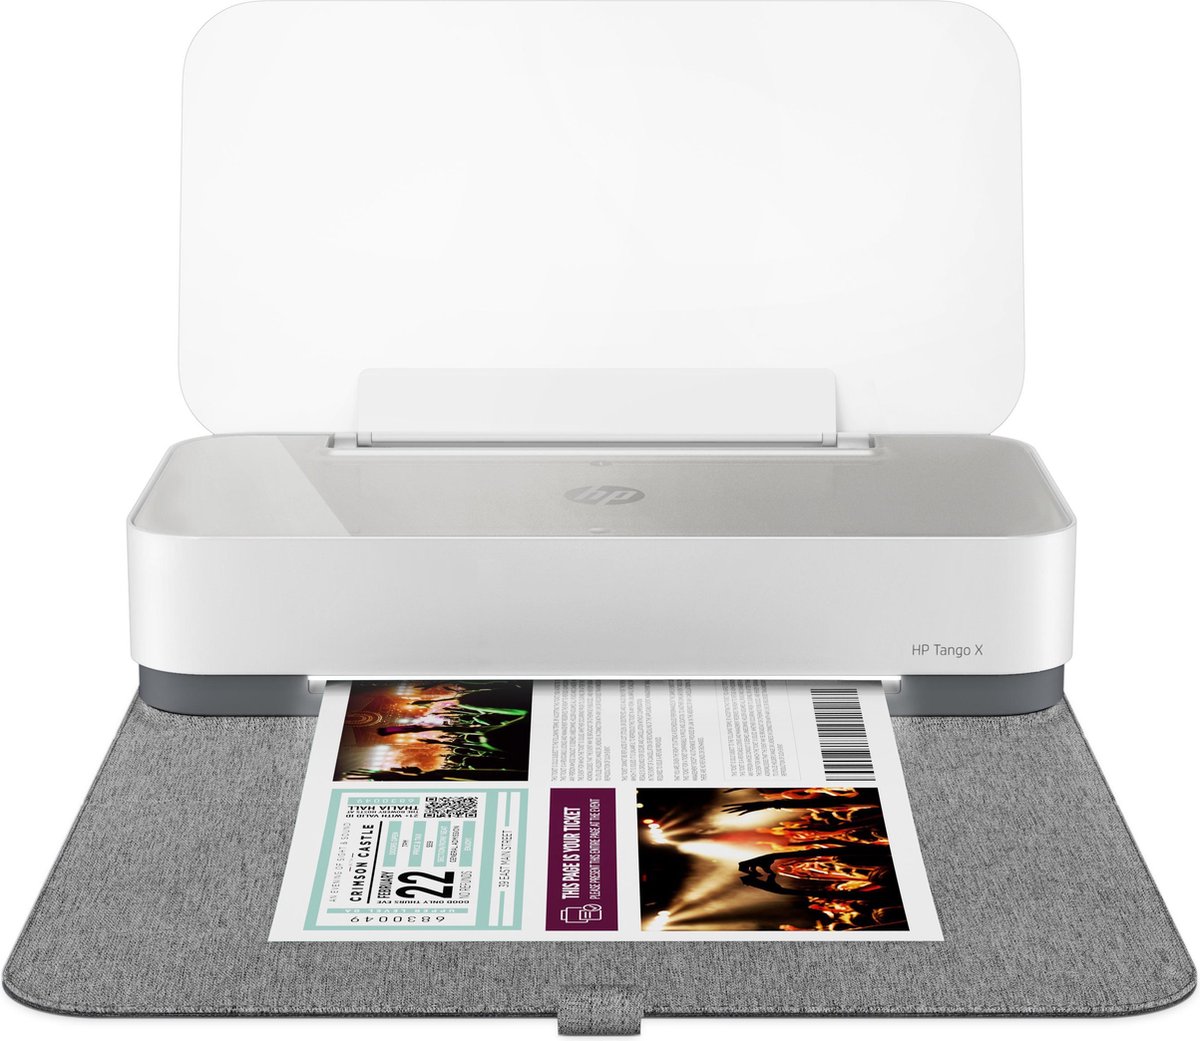 HP Tango X - Smart Home Printer - HP